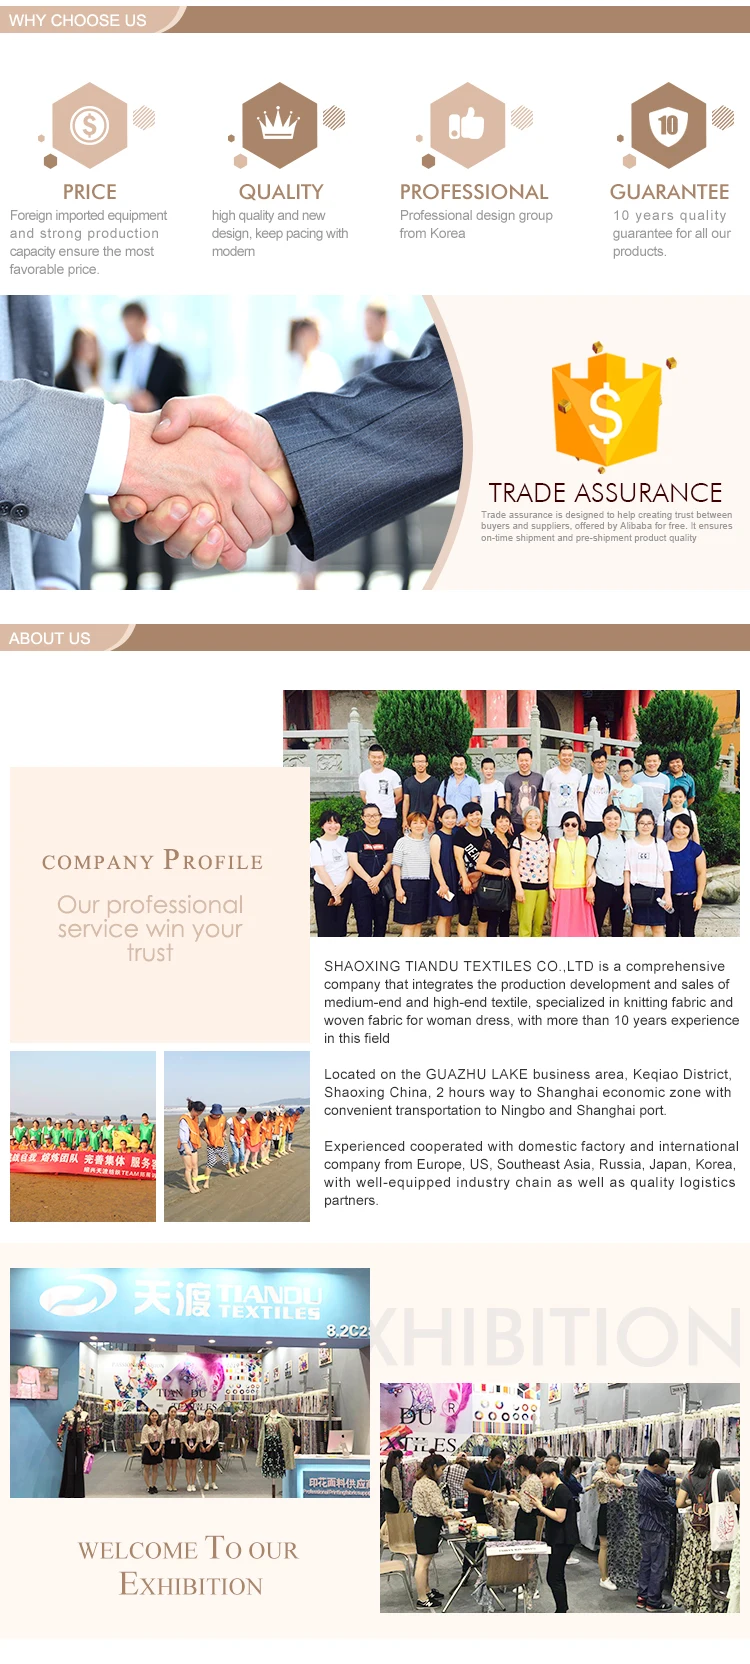 Company Overview Shaoxing Tiandu Textiles Co Ltd